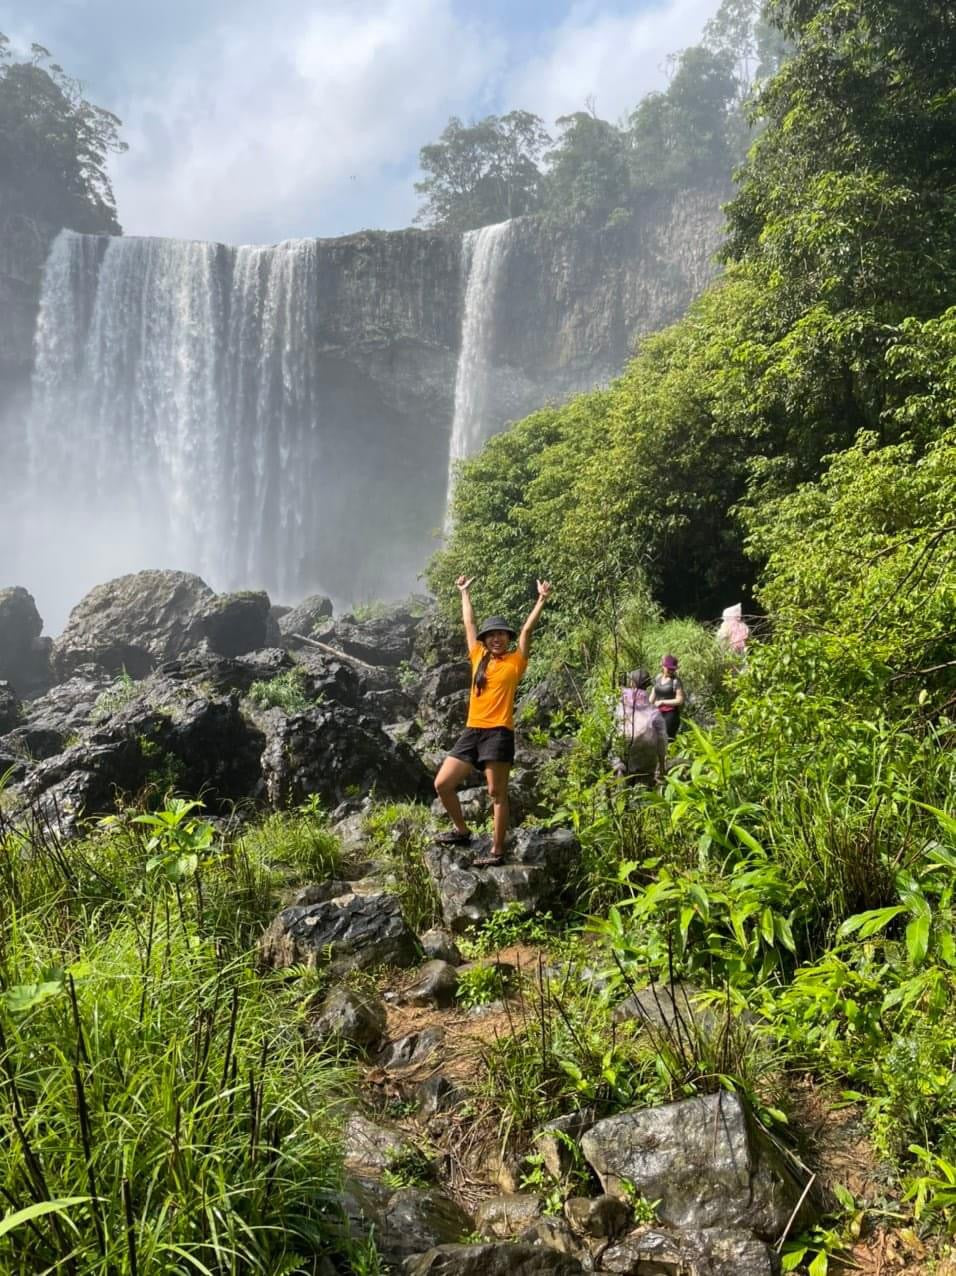 25B: (2 DAYS) K50 Waterfalls - Majestic Beauty Amidst The Pristine Kon Chu Rang Forest